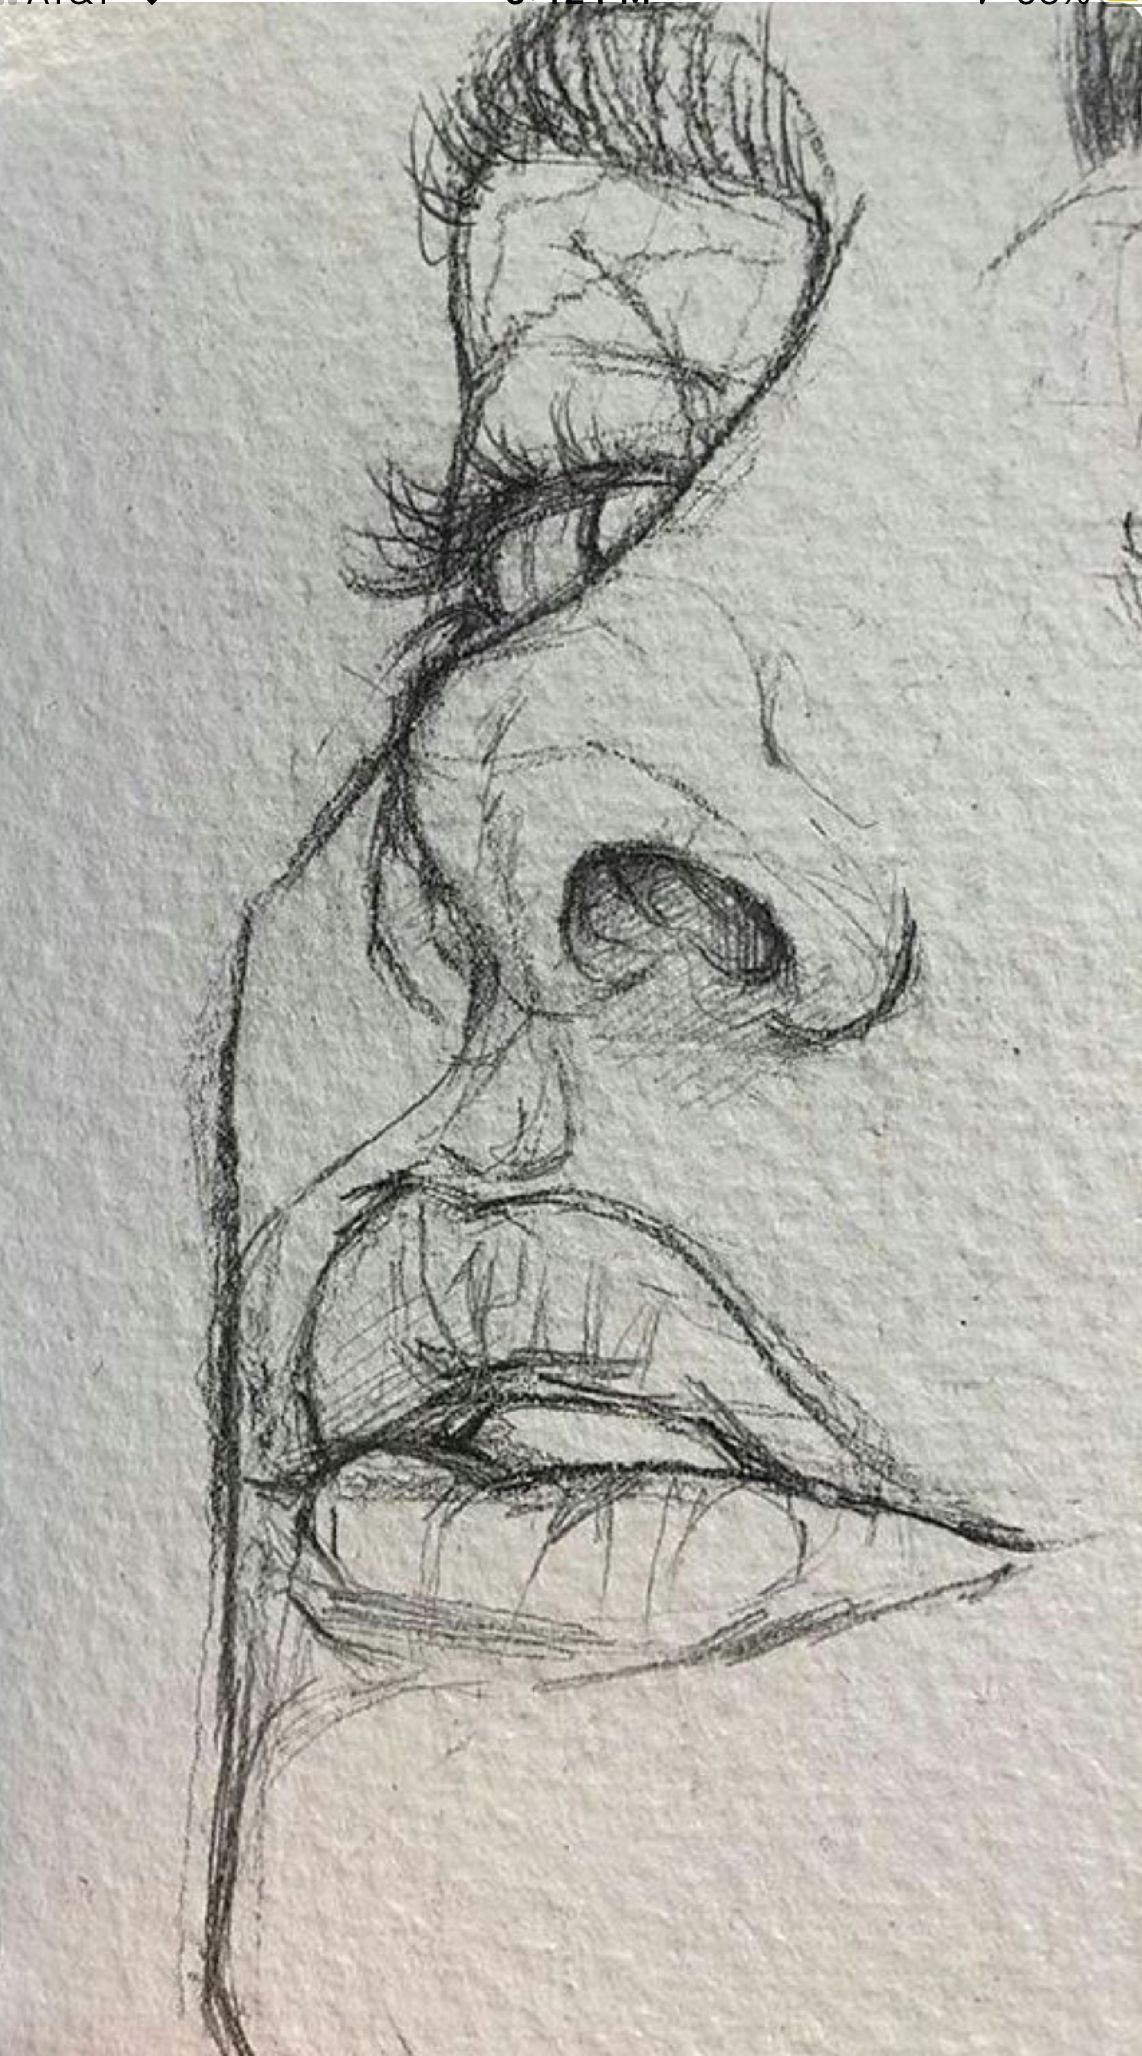 Woman's face pencil drawing - Woman's face pencil drawing -   13 beauty Drawings of boys ideas